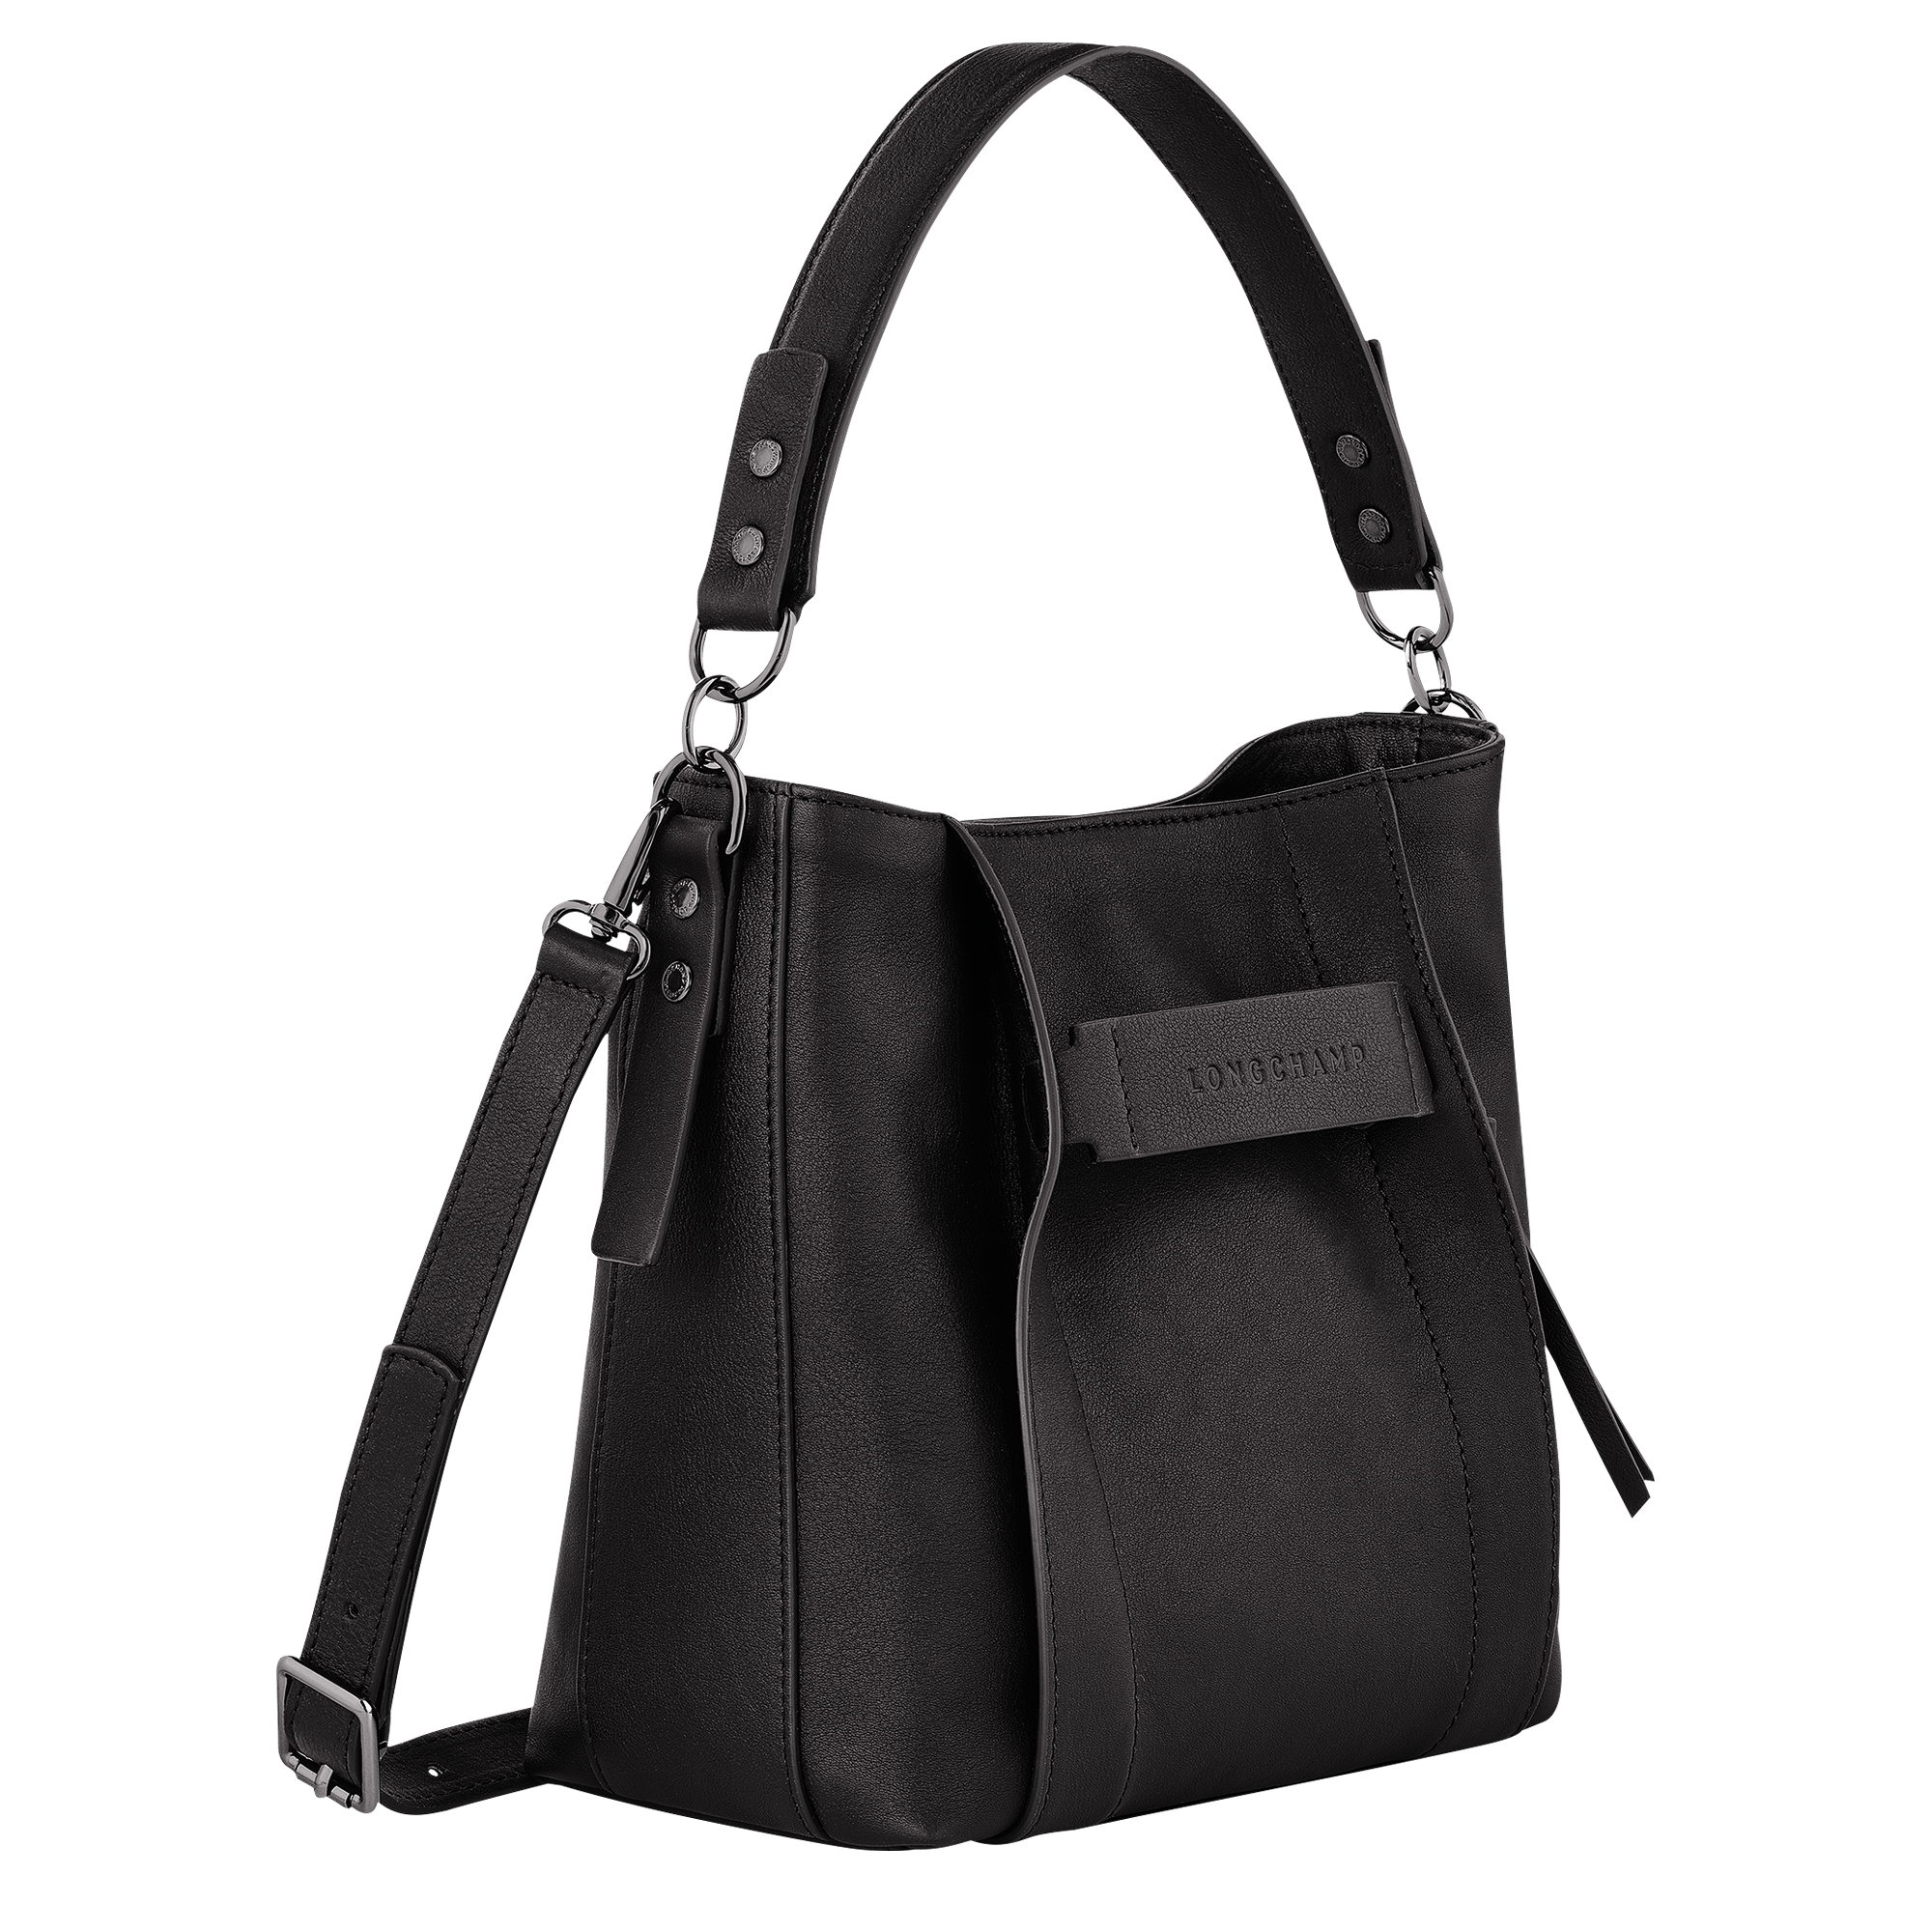 Longchamp 3D Leather Crossbody Hobo Bag